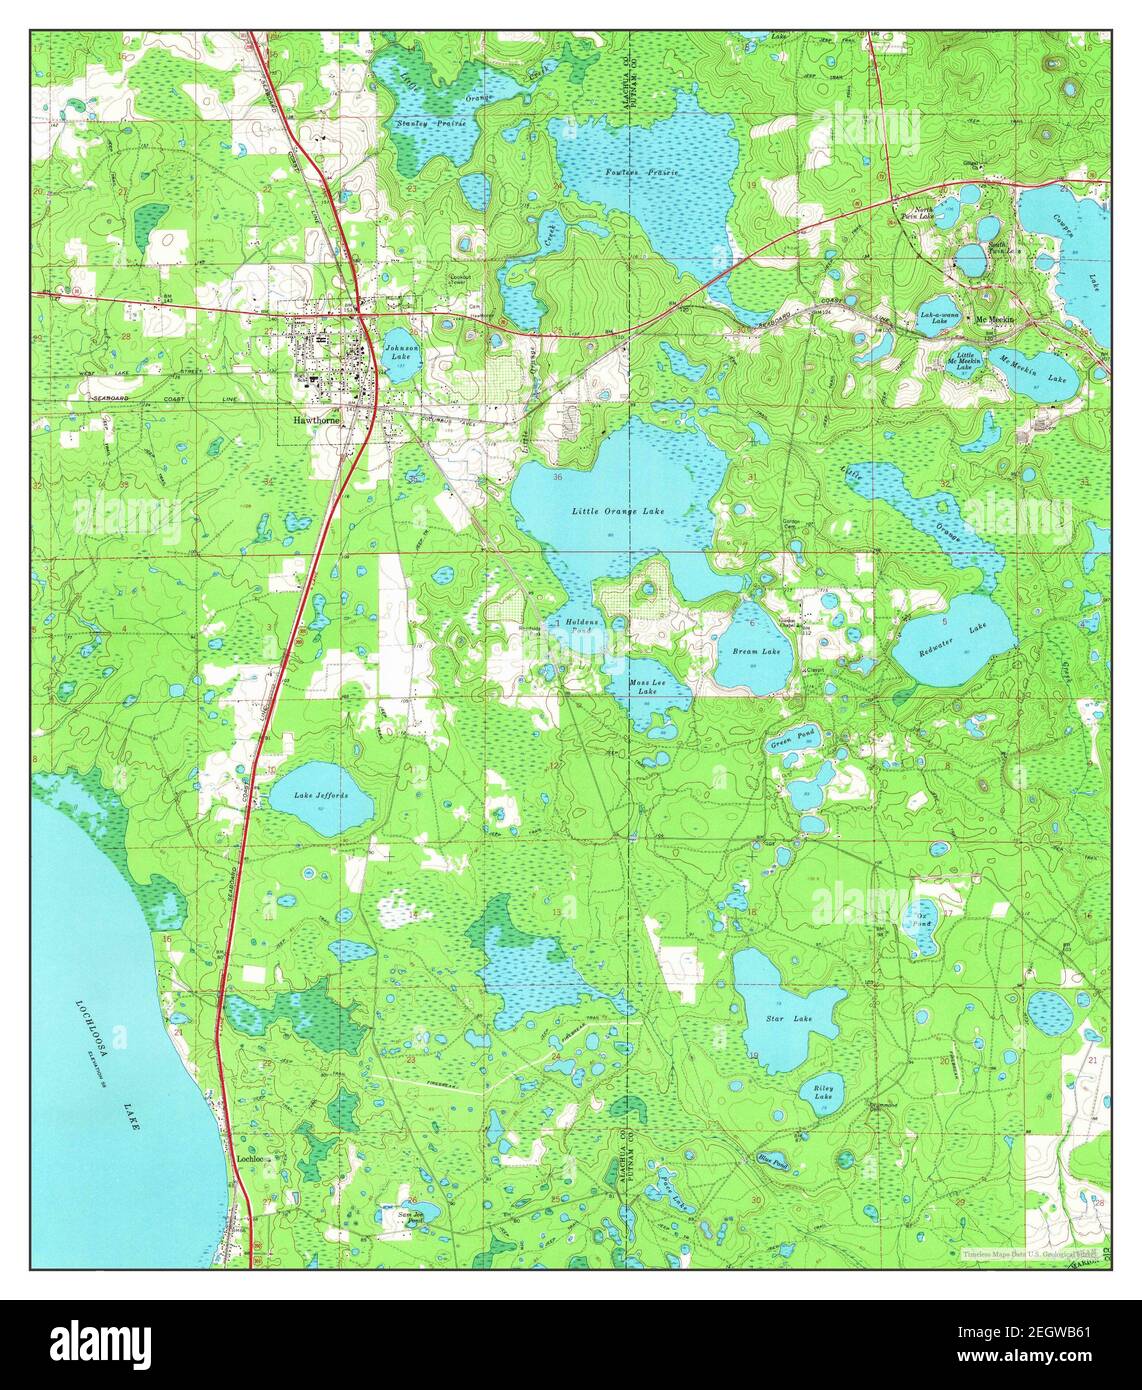 Hawthorne Florida Map 1966 124000 United States Of America By Timeless Maps Data Us Geological Survey 2EGWB61 